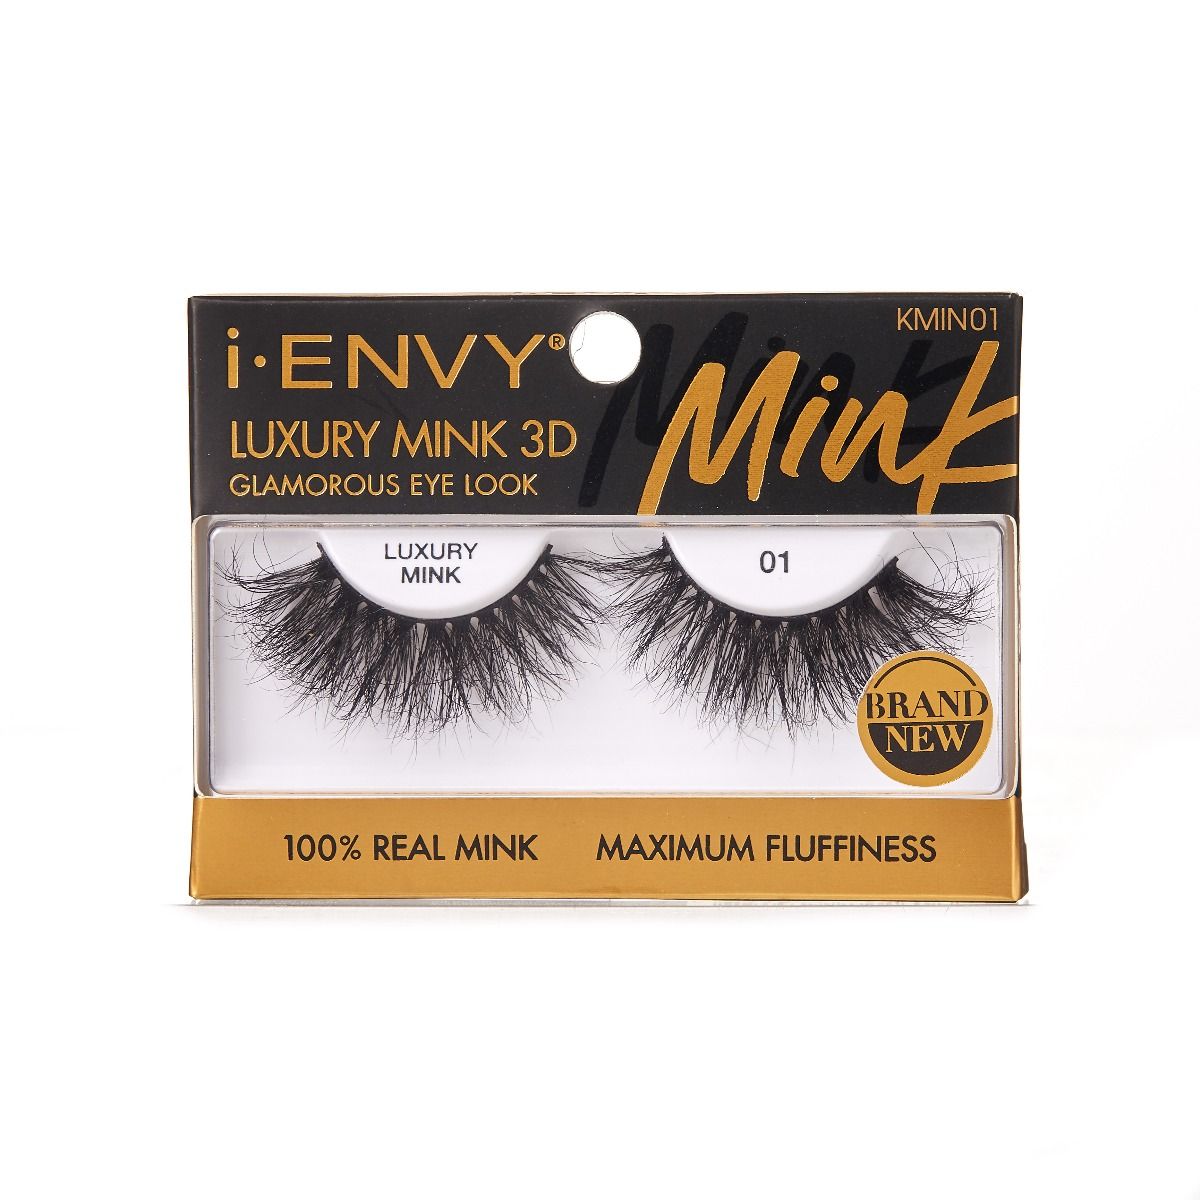 i.ENVY Luxury Mink 3D Lashes (KMIN01)